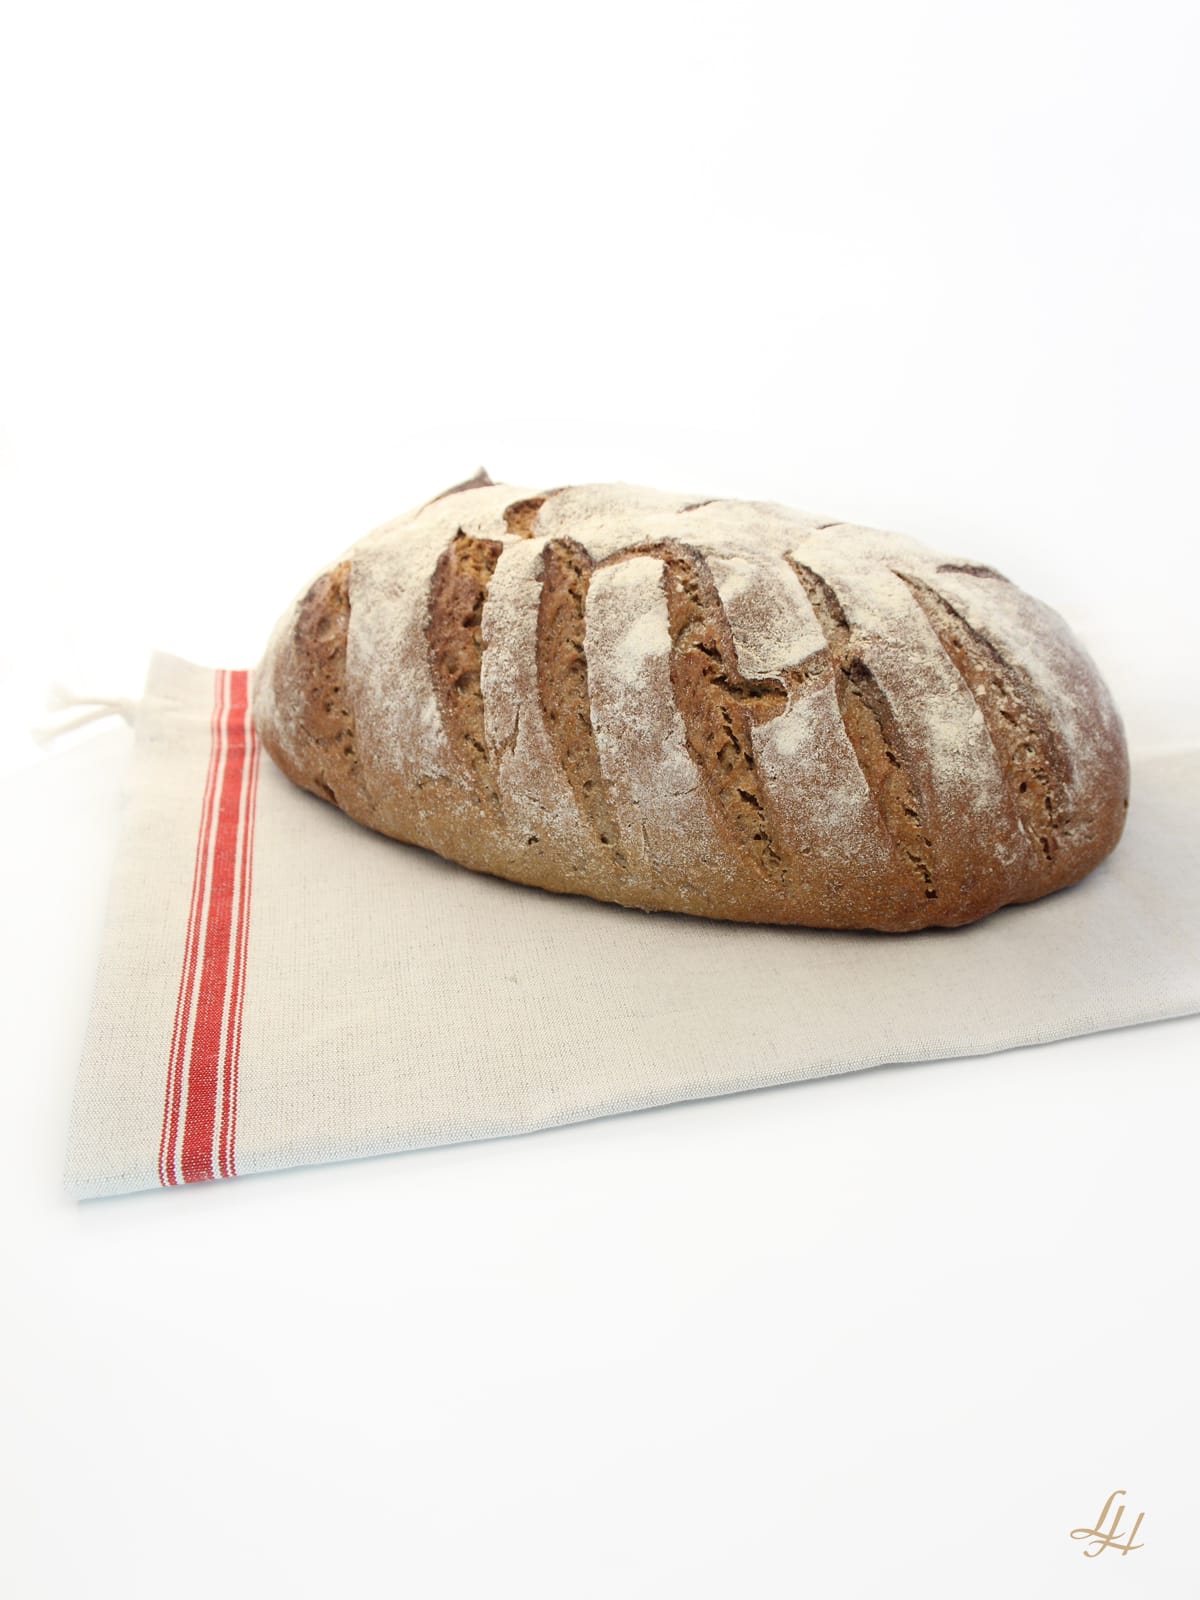 Brotbeutel ohne Stickerei in Rot mit Brot